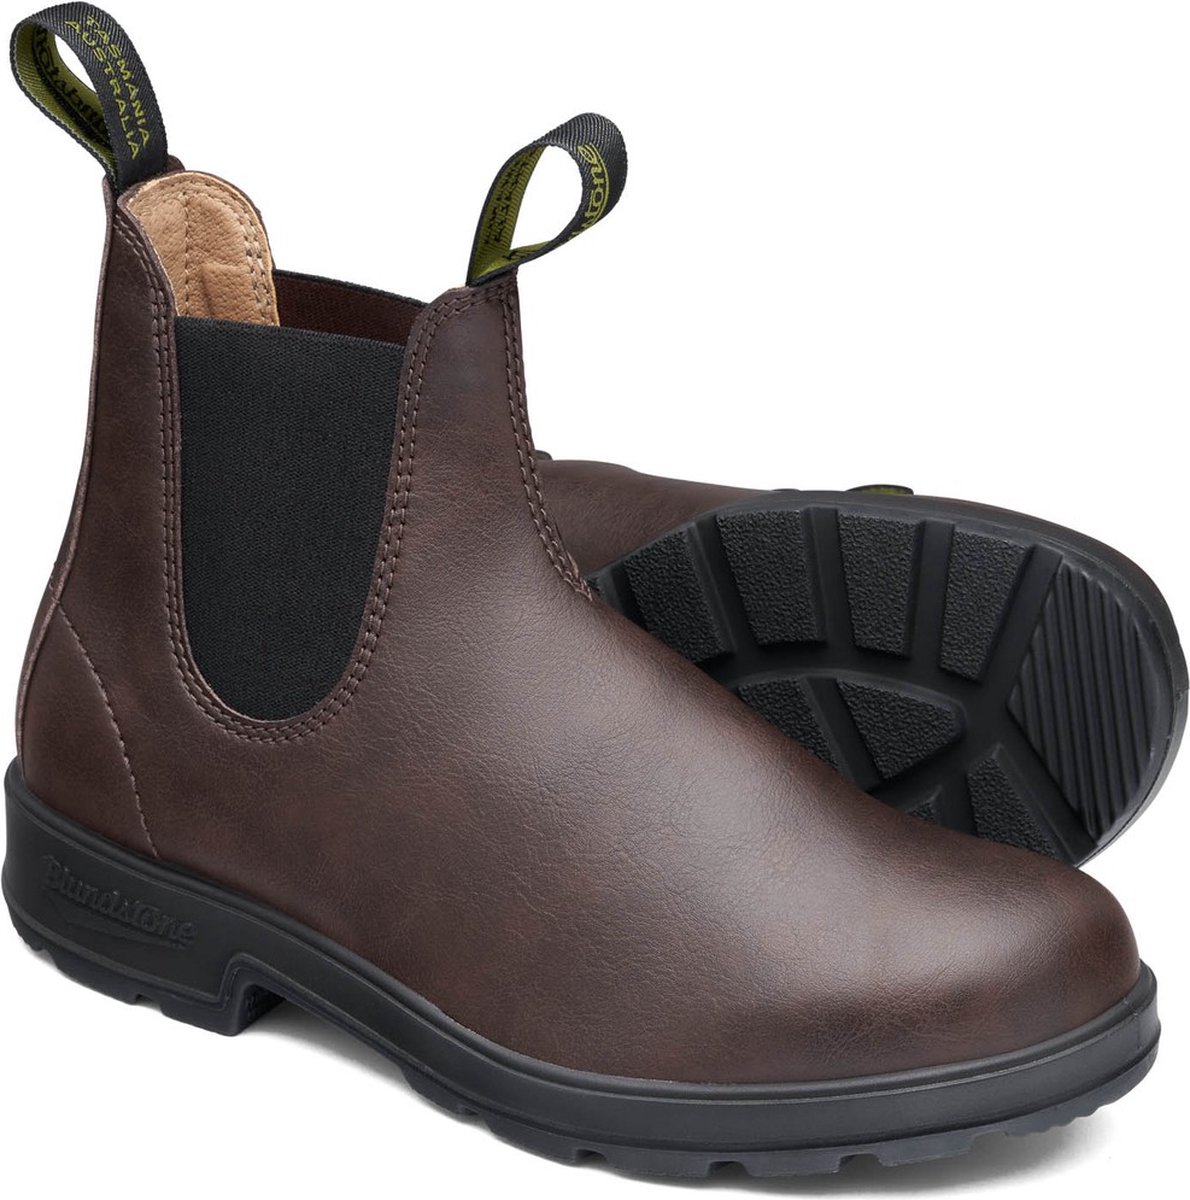 Blundstone Stiefel Boots #2116 Vegan Brown-7.5UK